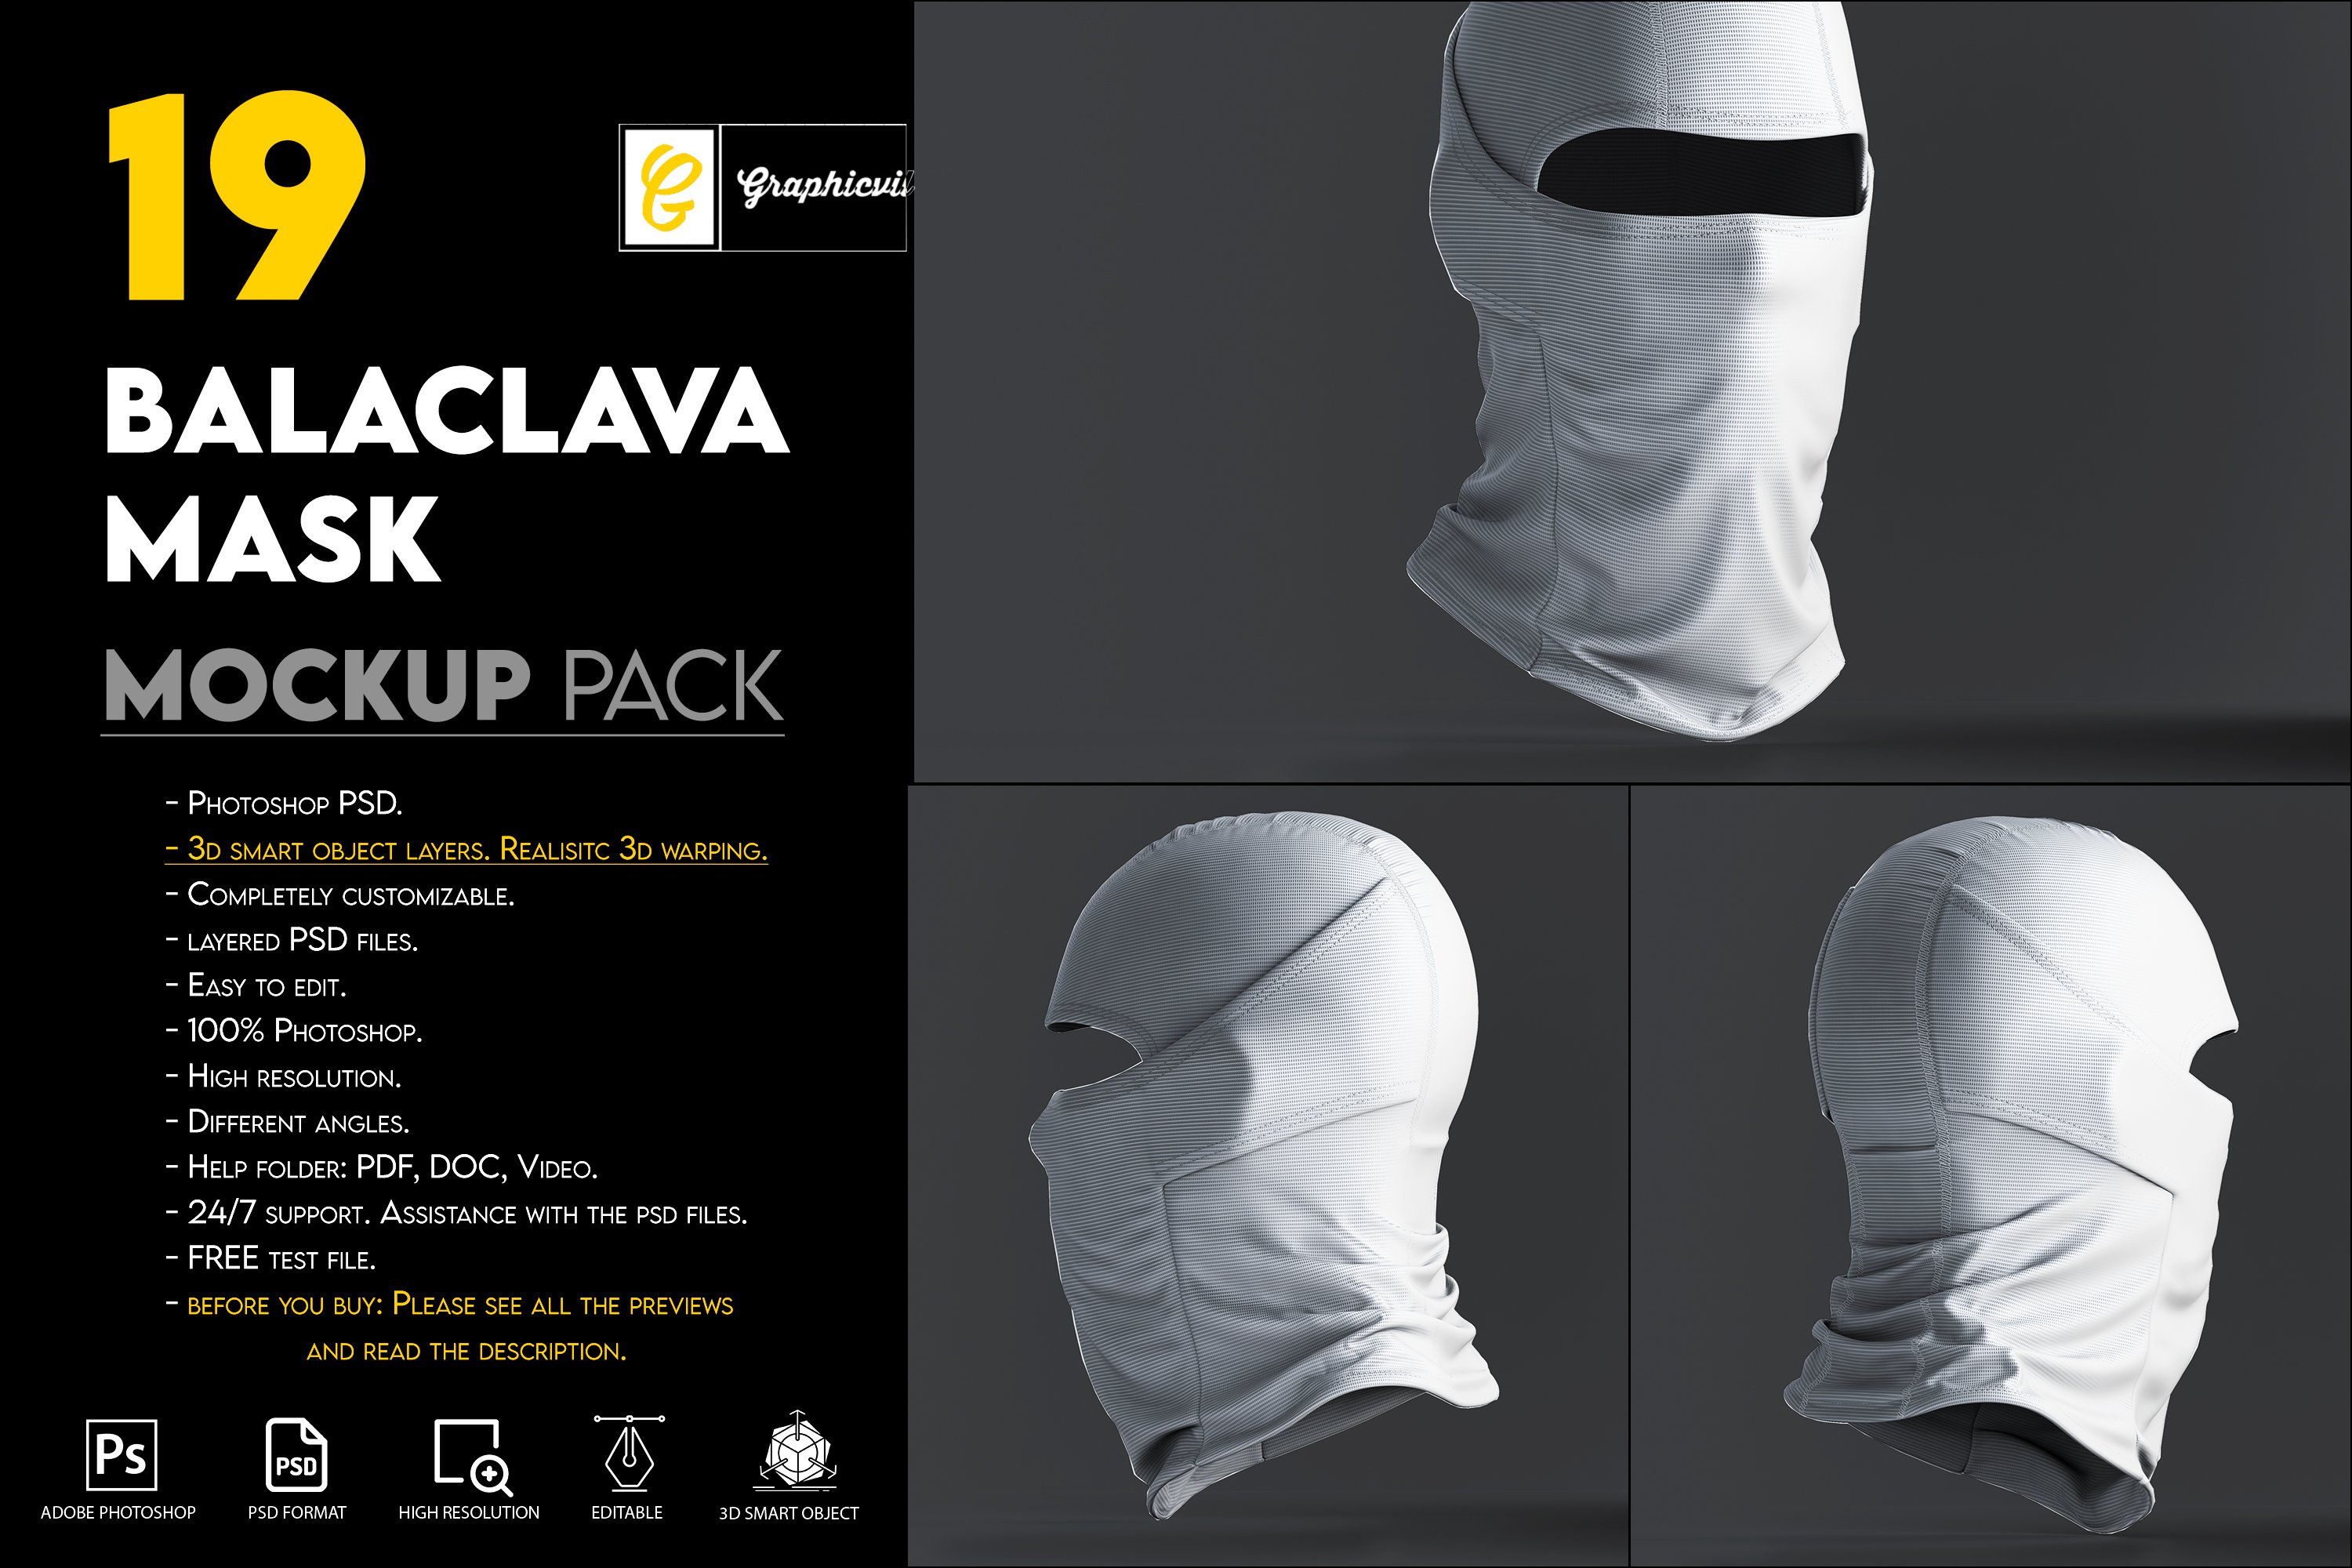 Balaclava Mask Mockup preview image.